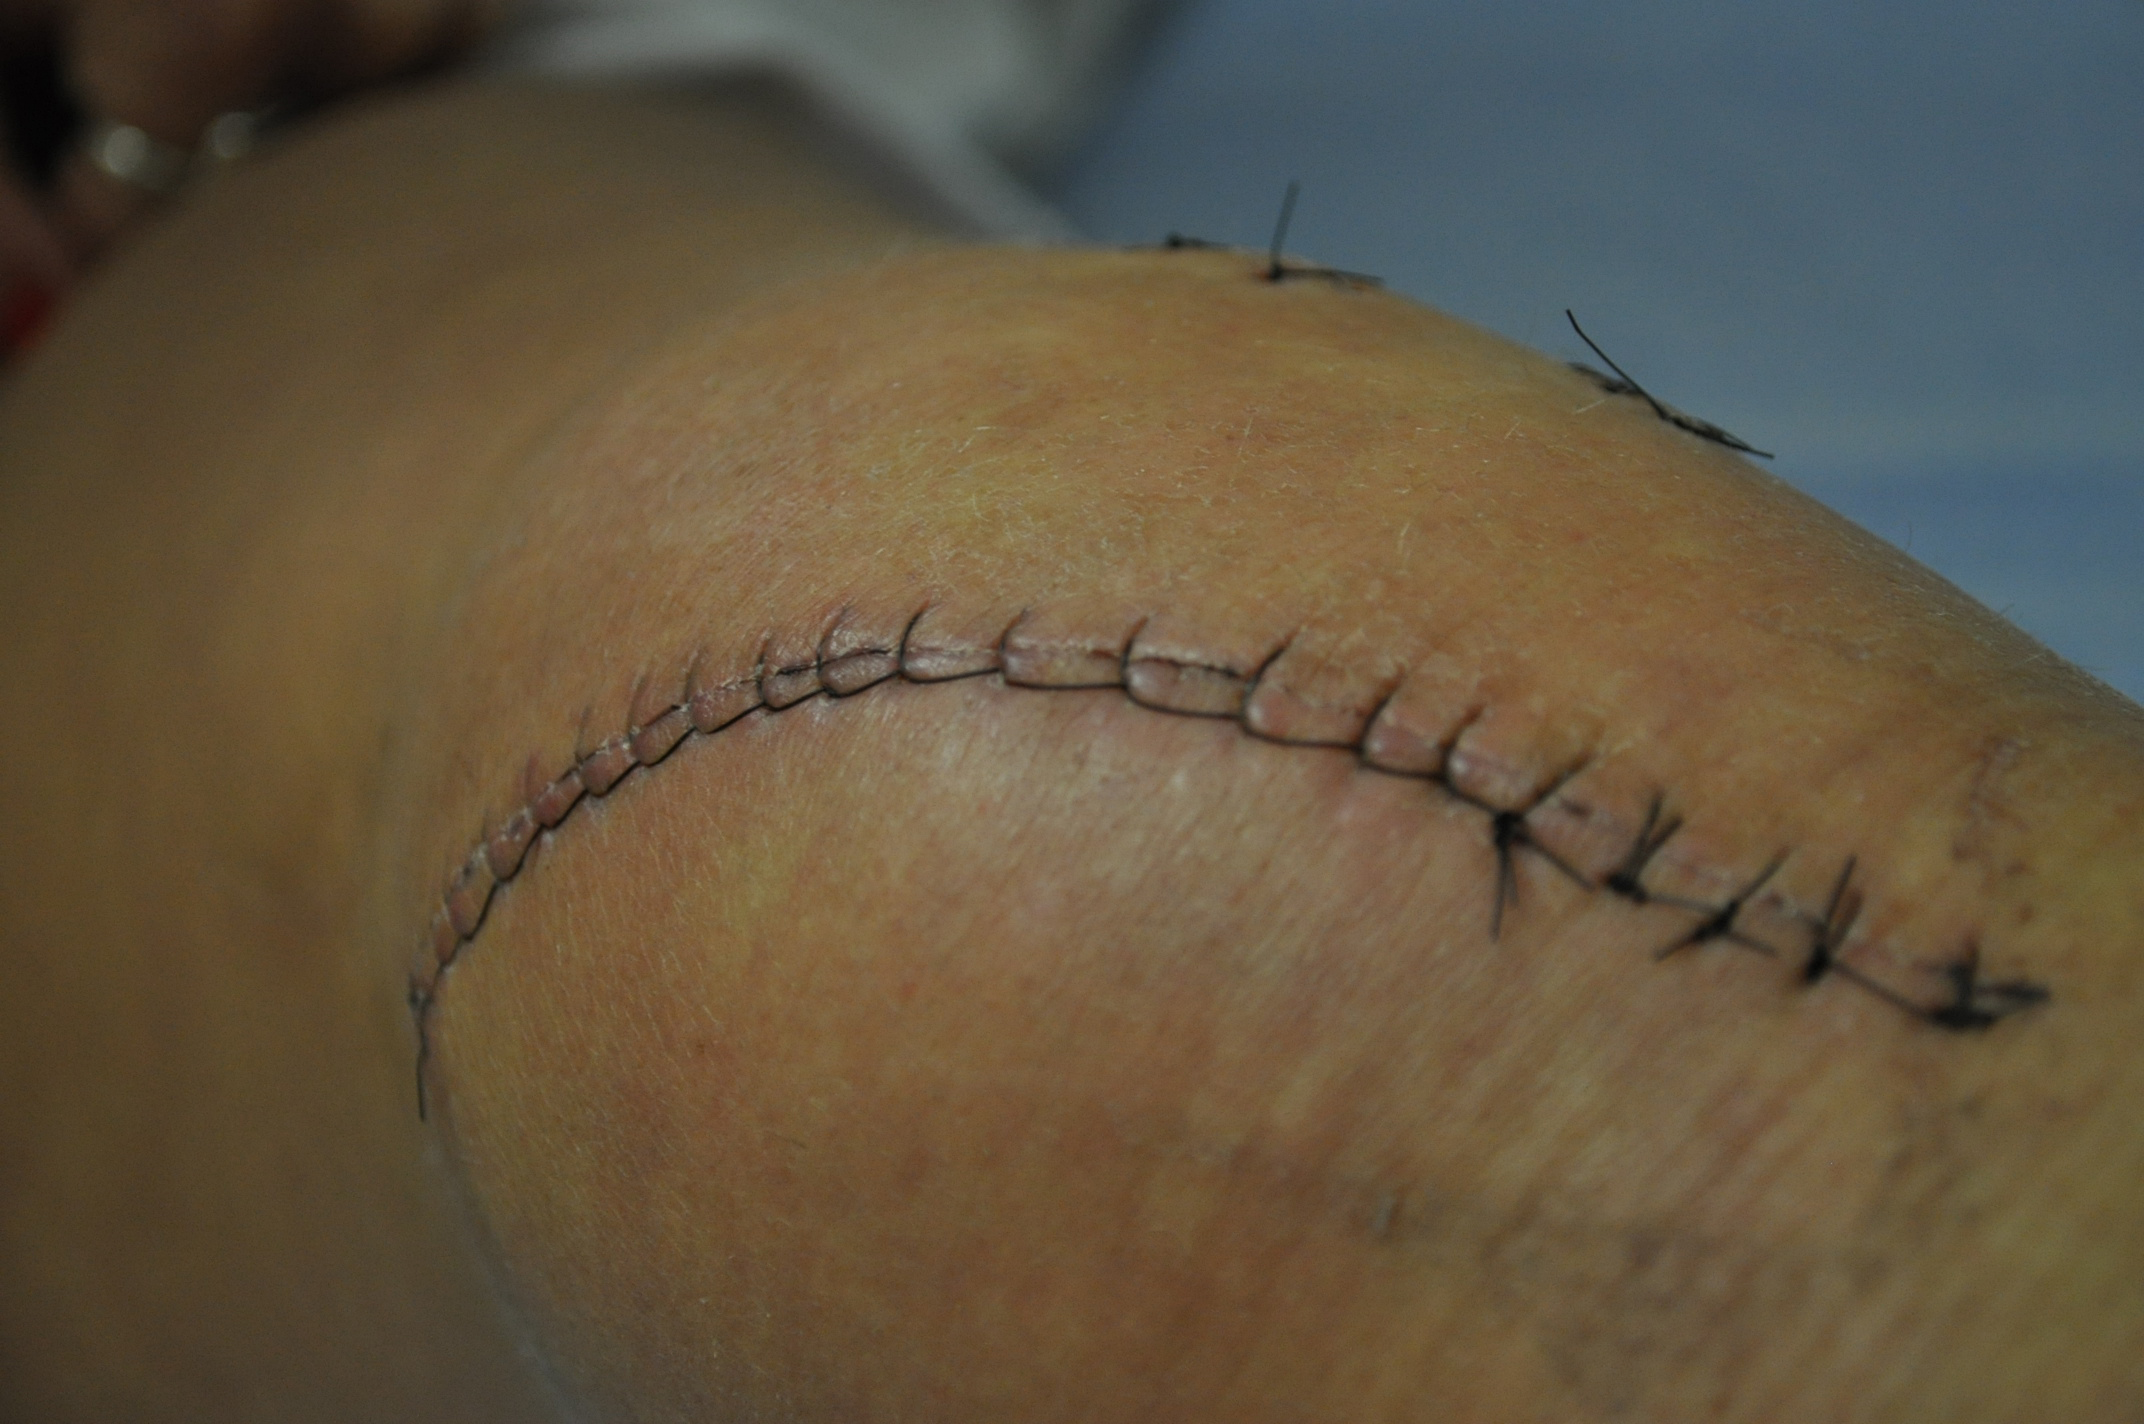 Stitches On Leg